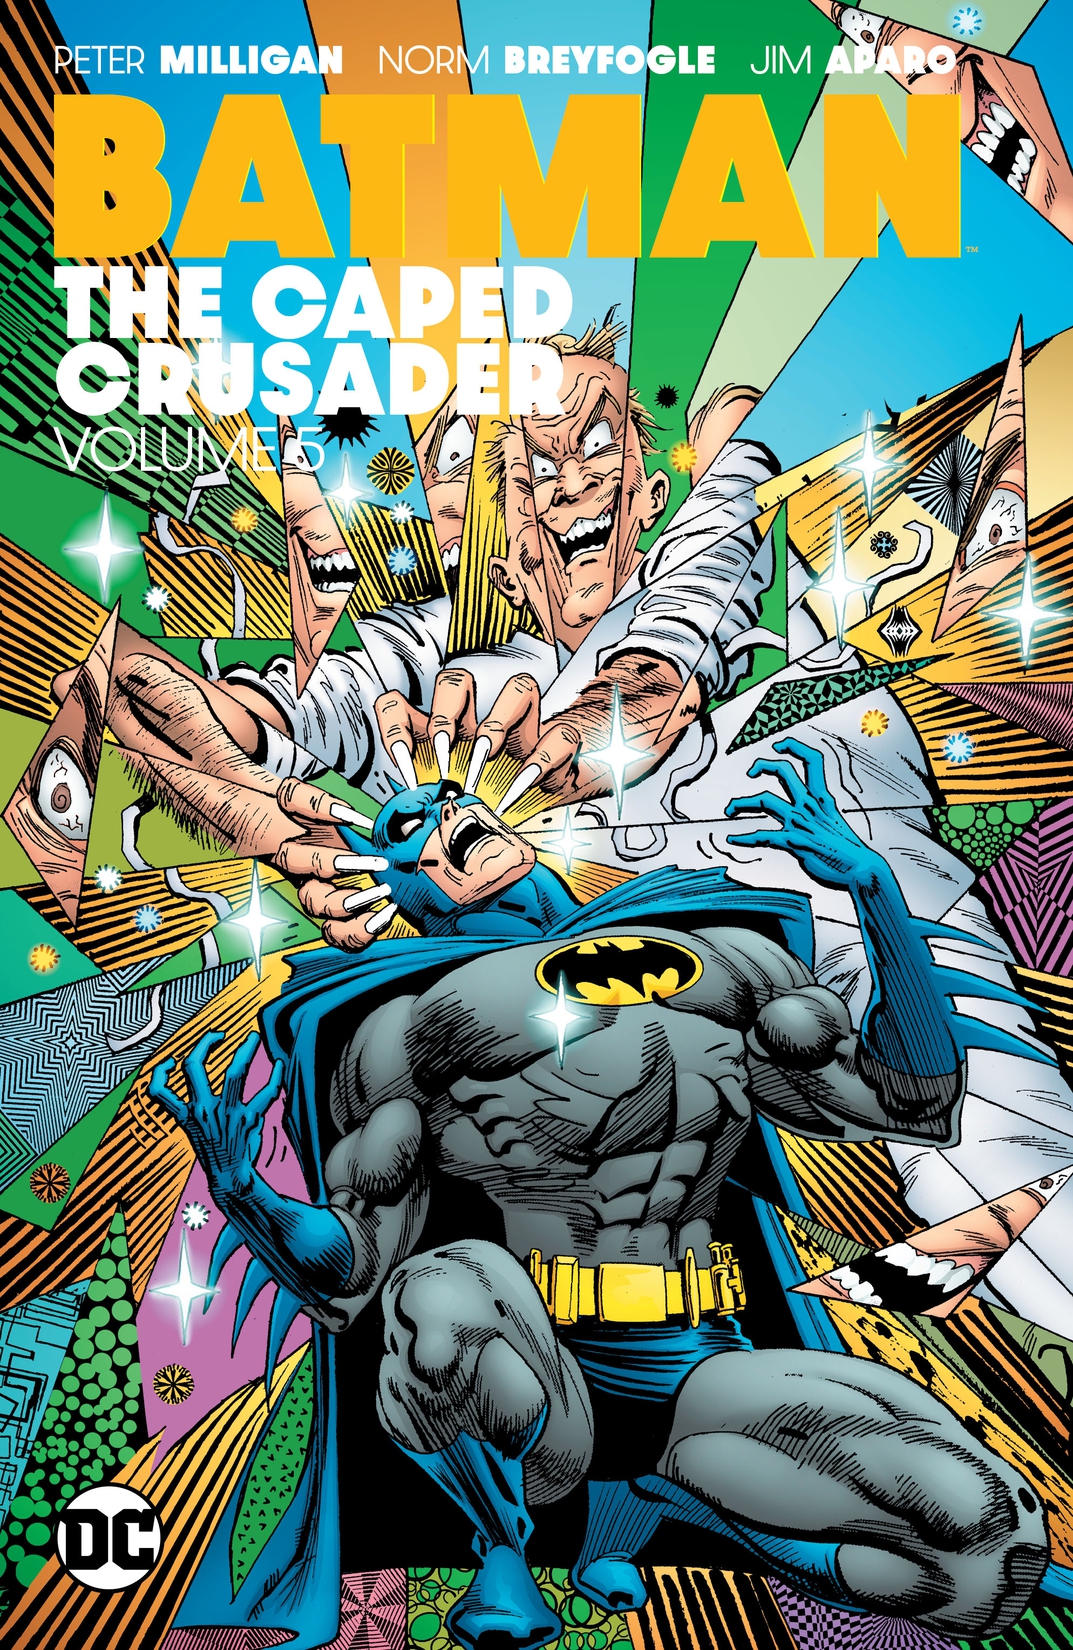 Batman: The Caped Crusader Vol. 5 preview images